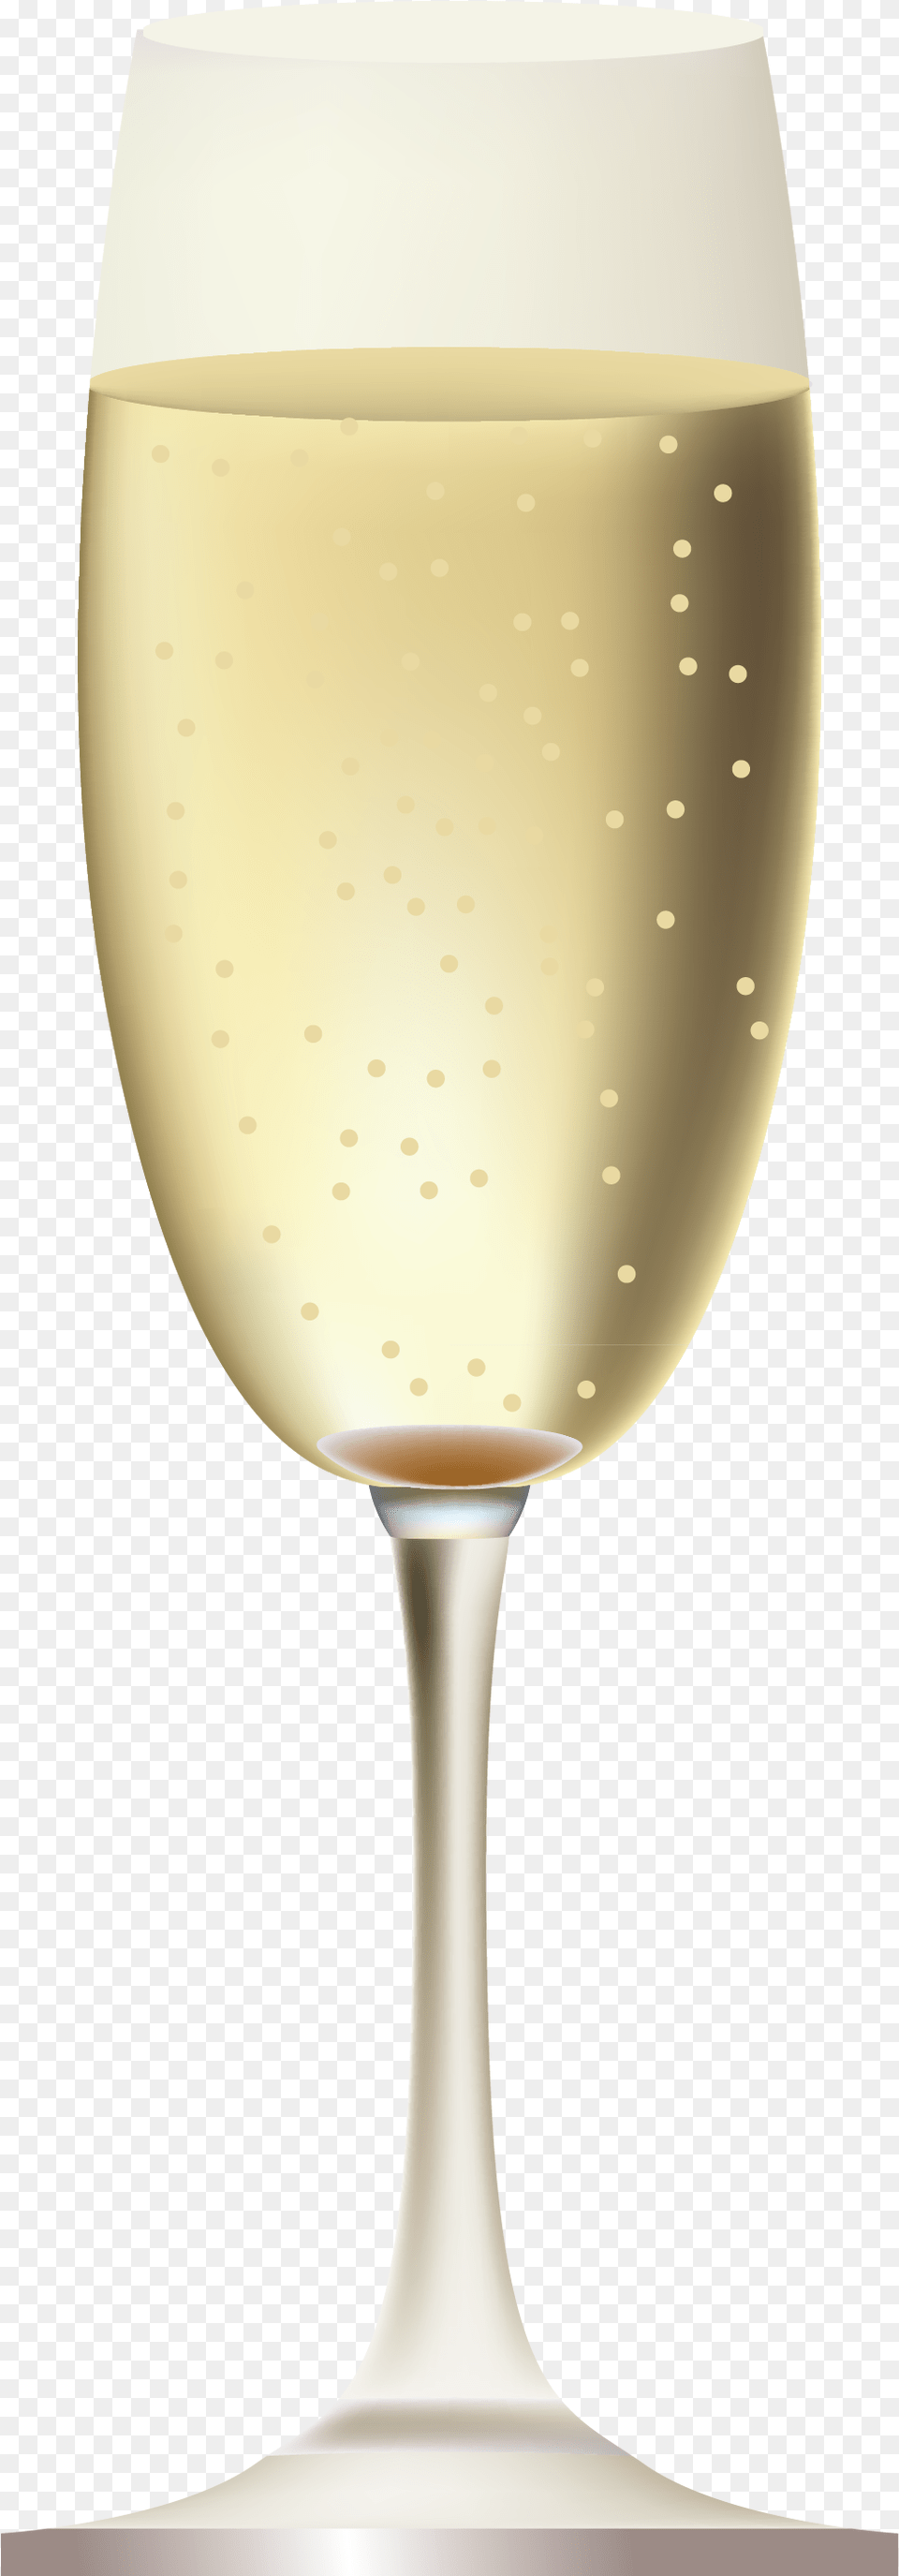 Champagne Glass Wine Glass, Alcohol, Beverage, Liquor, Wine Glass Png Image